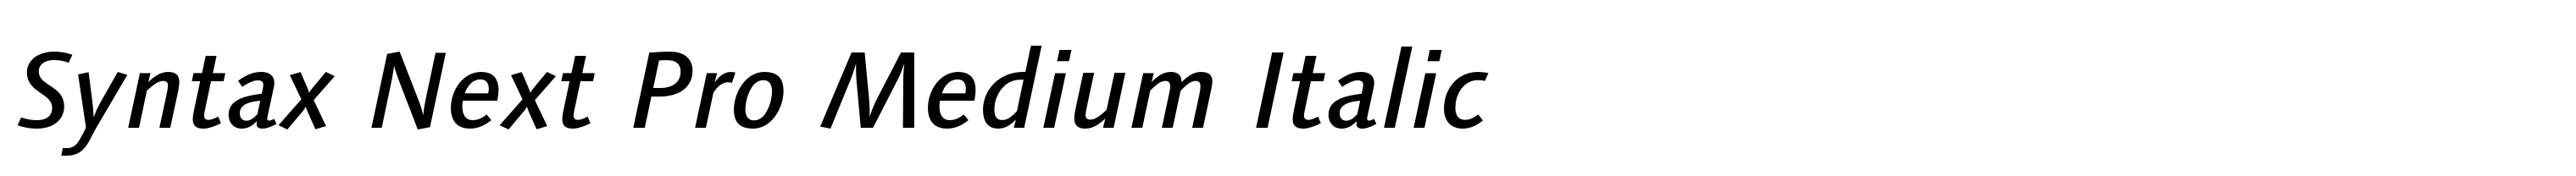 Syntax Next Pro Medium Italic